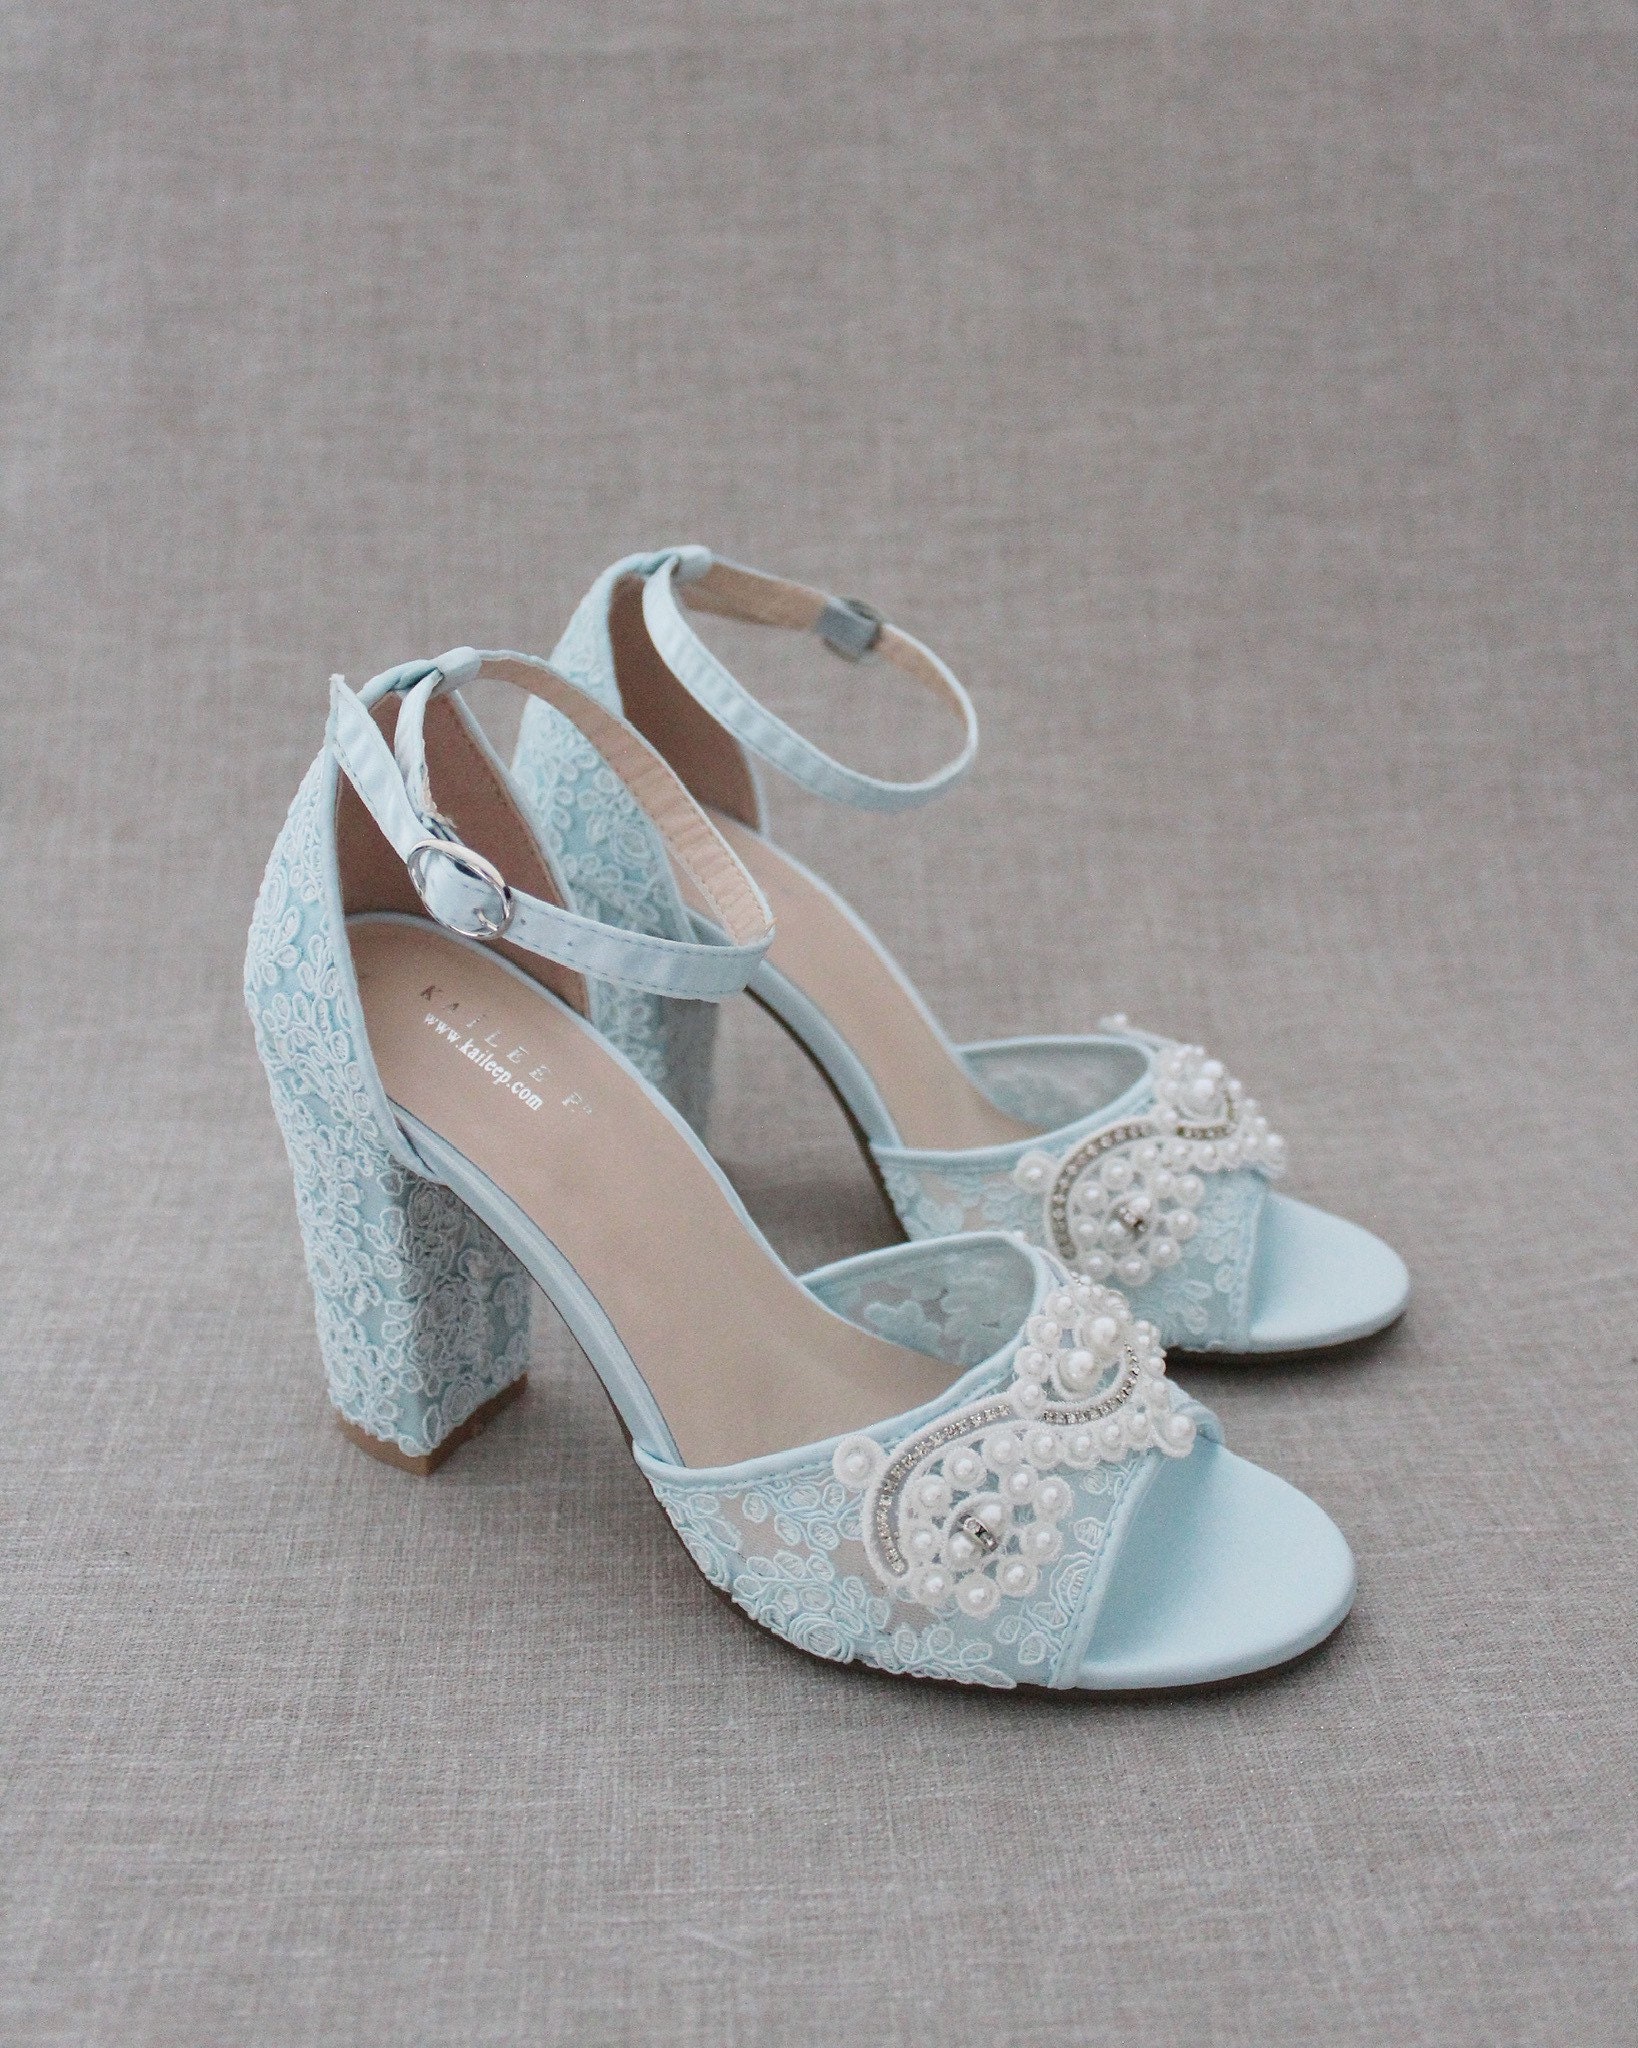 Buy BLUE ANKLE SHOES, Light Blue High Heels, Baby Blue Velvet Shoes, Wedding  Heels, Bridal Block Heel, Classic Wedding Shoes, Vegan Gift for Her Online  in India - Etsy